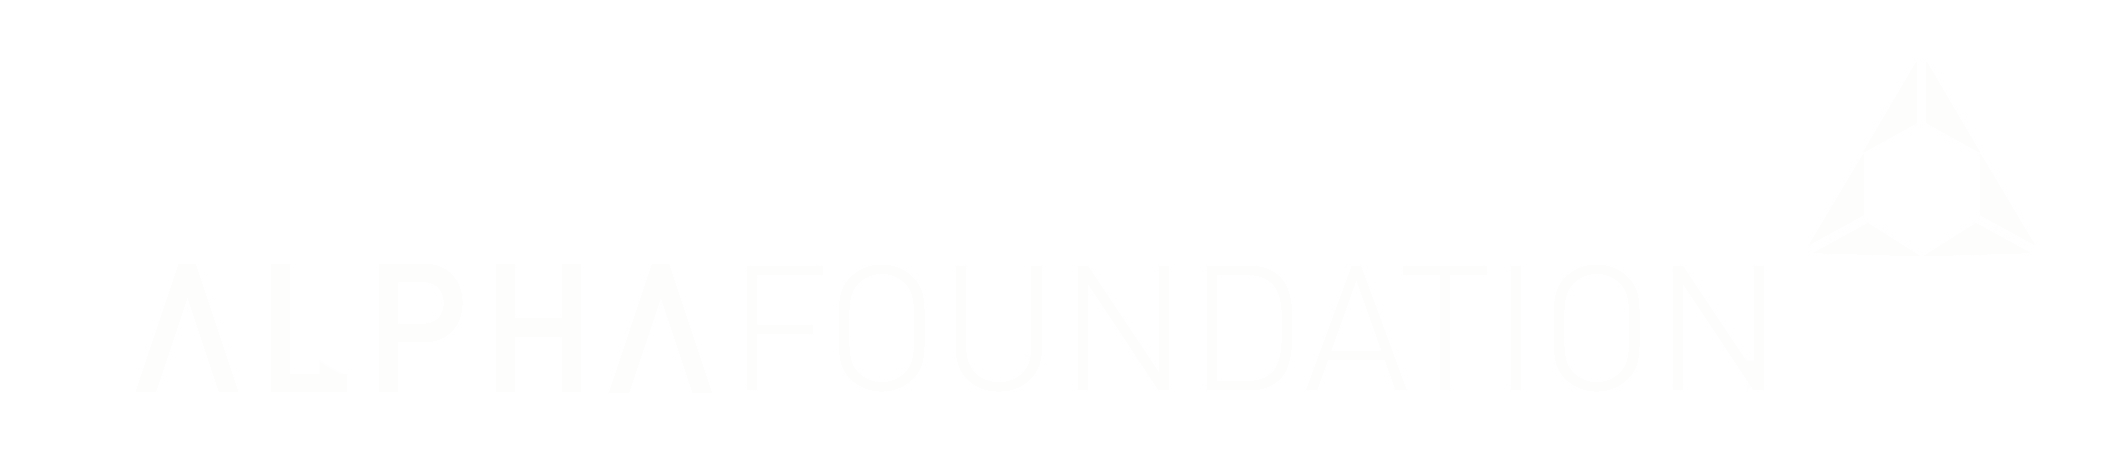 Alpha Wealth Foundation New Logo